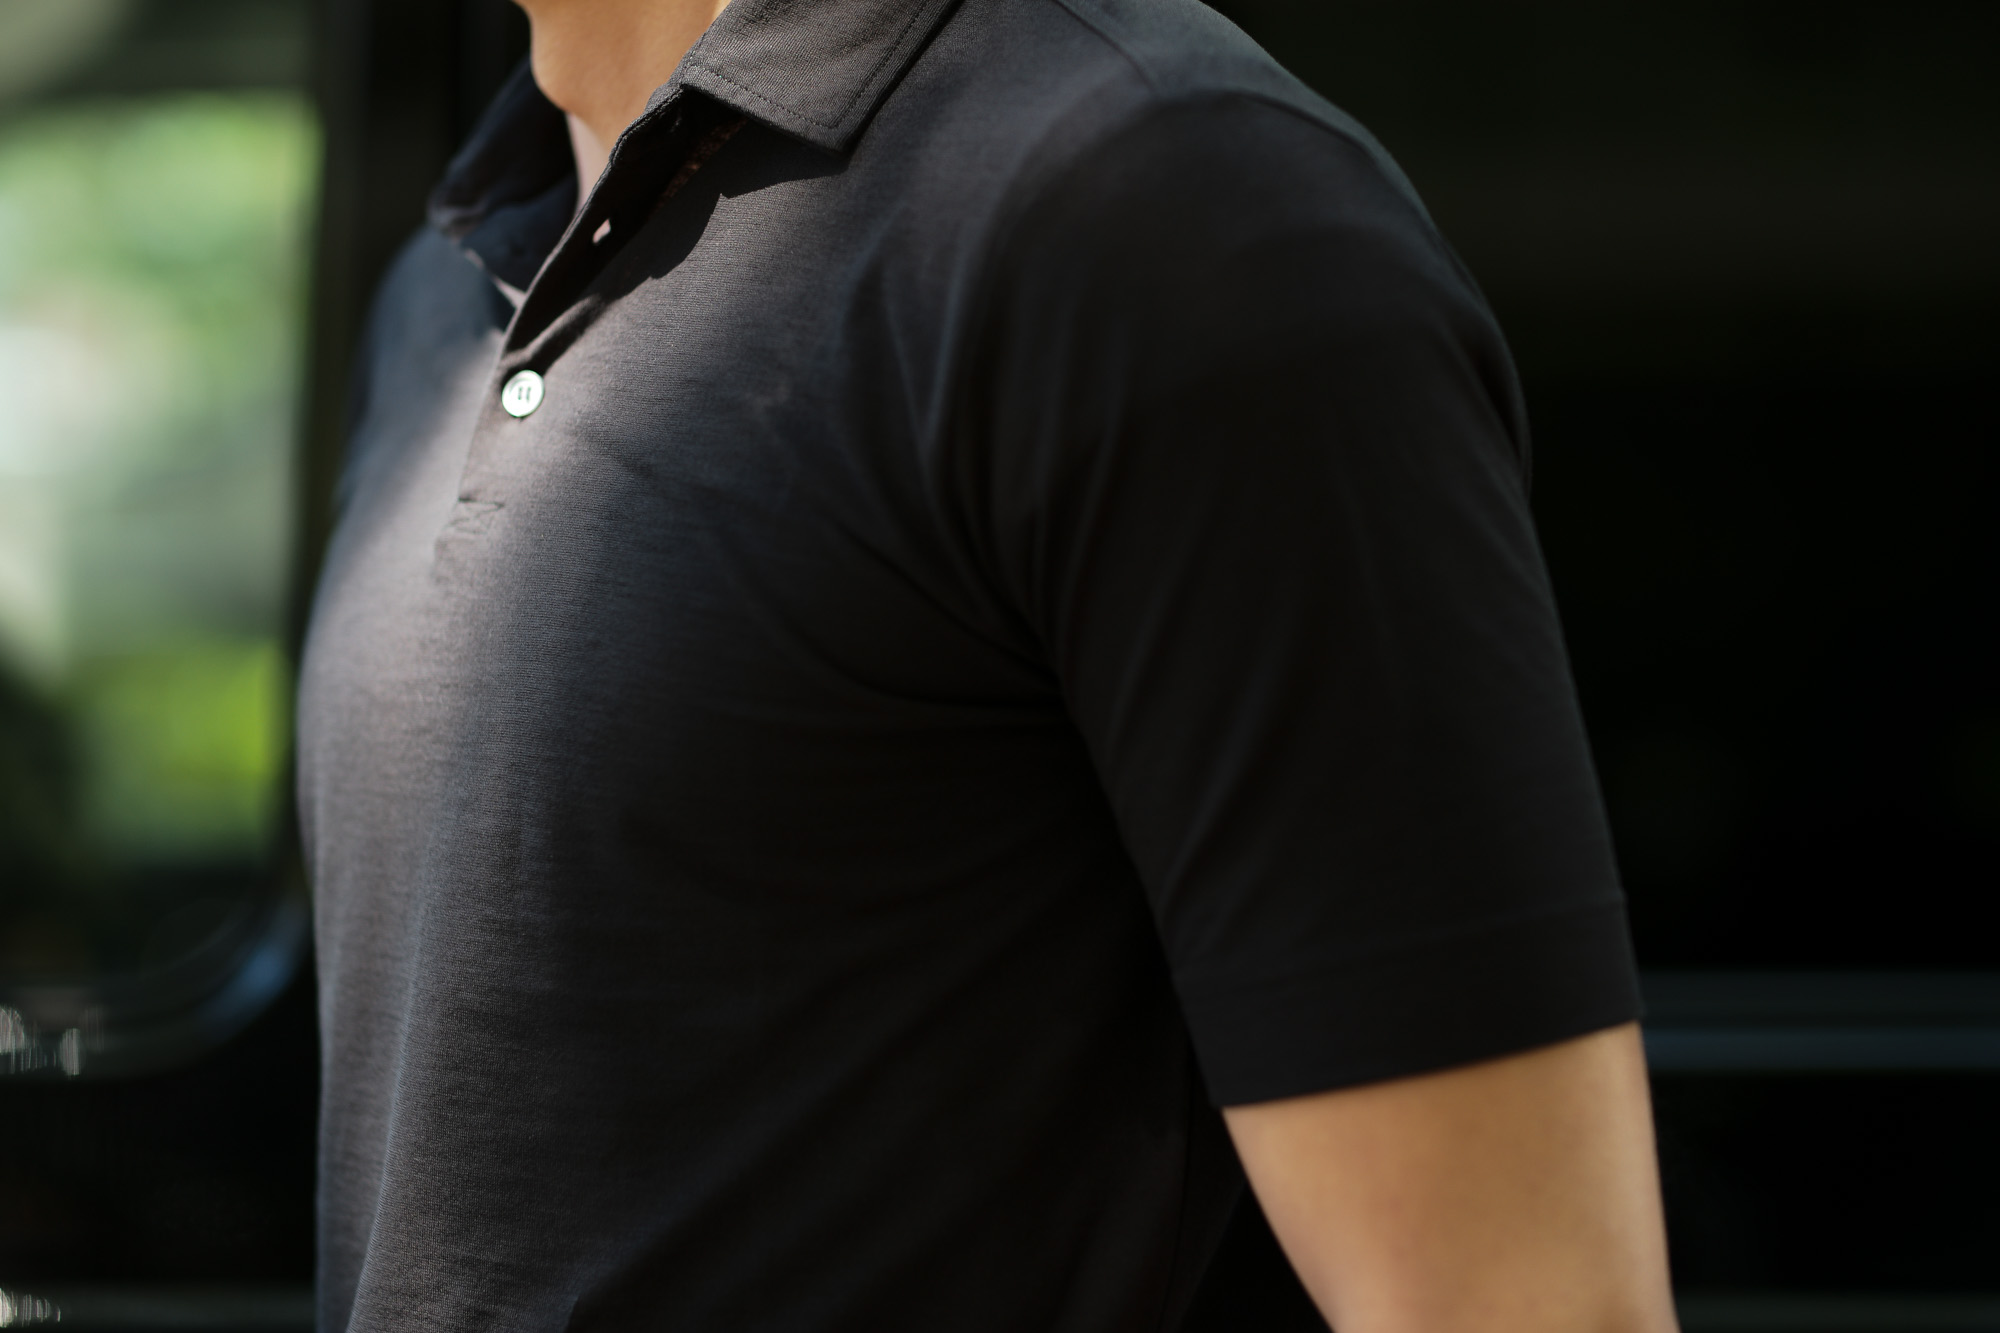 ZANONE(ザノーネ) Polo Shirt ice cotton アイスコットン ポロシャツ BLACK (ブラック・Z0015) made in italy (イタリア製) 2019 春夏新作 愛知 名古屋 altoediritto アルトエデリット